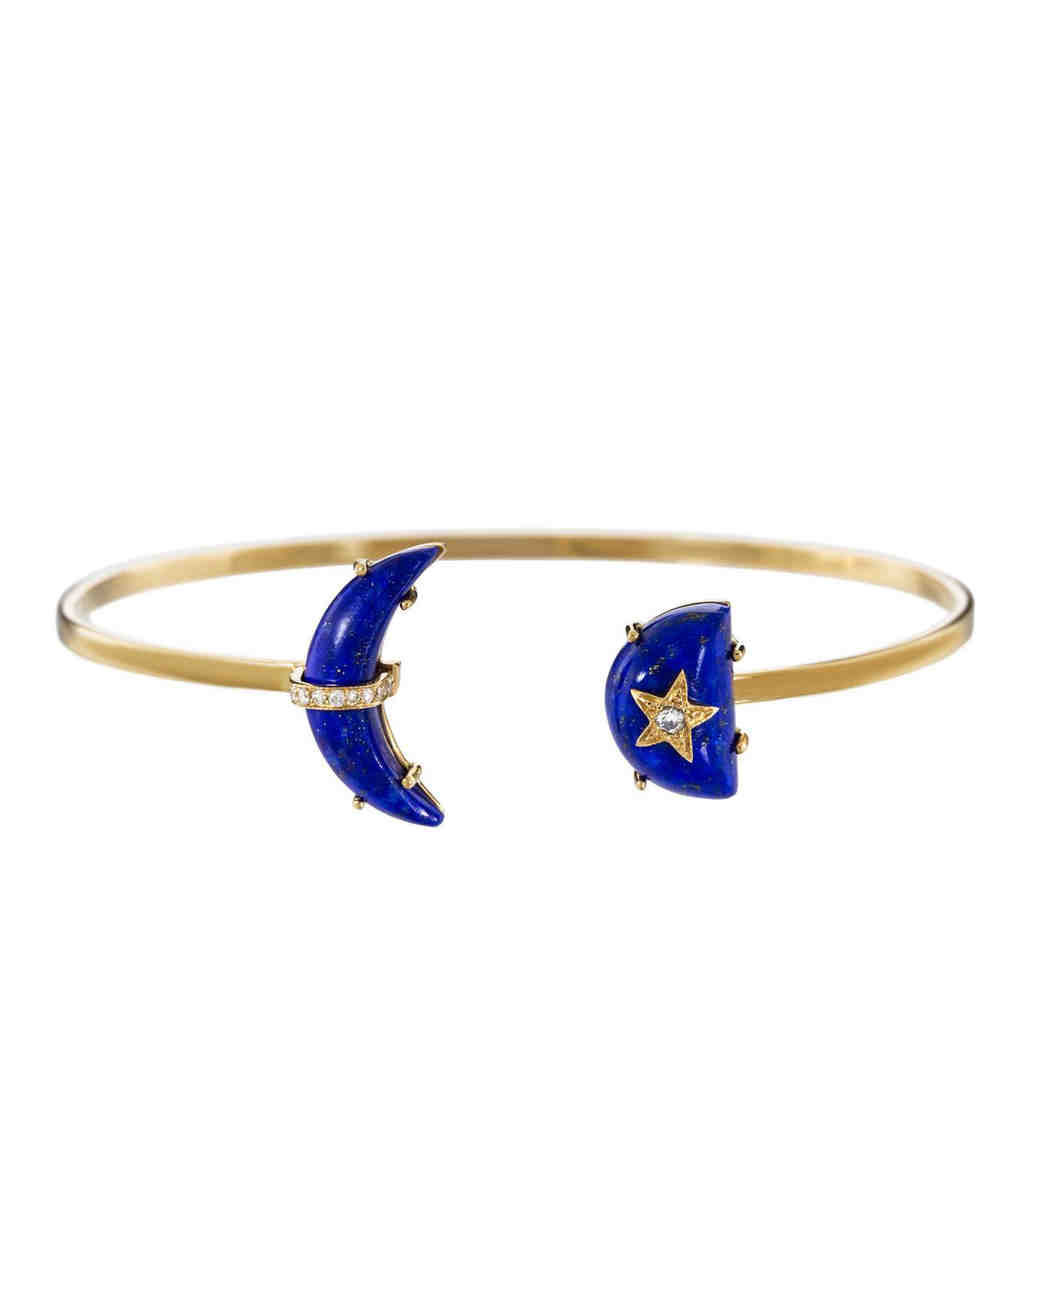 Celestial-Inspired Wedding Jewelry for Boho Brides | Martha Stewart ...